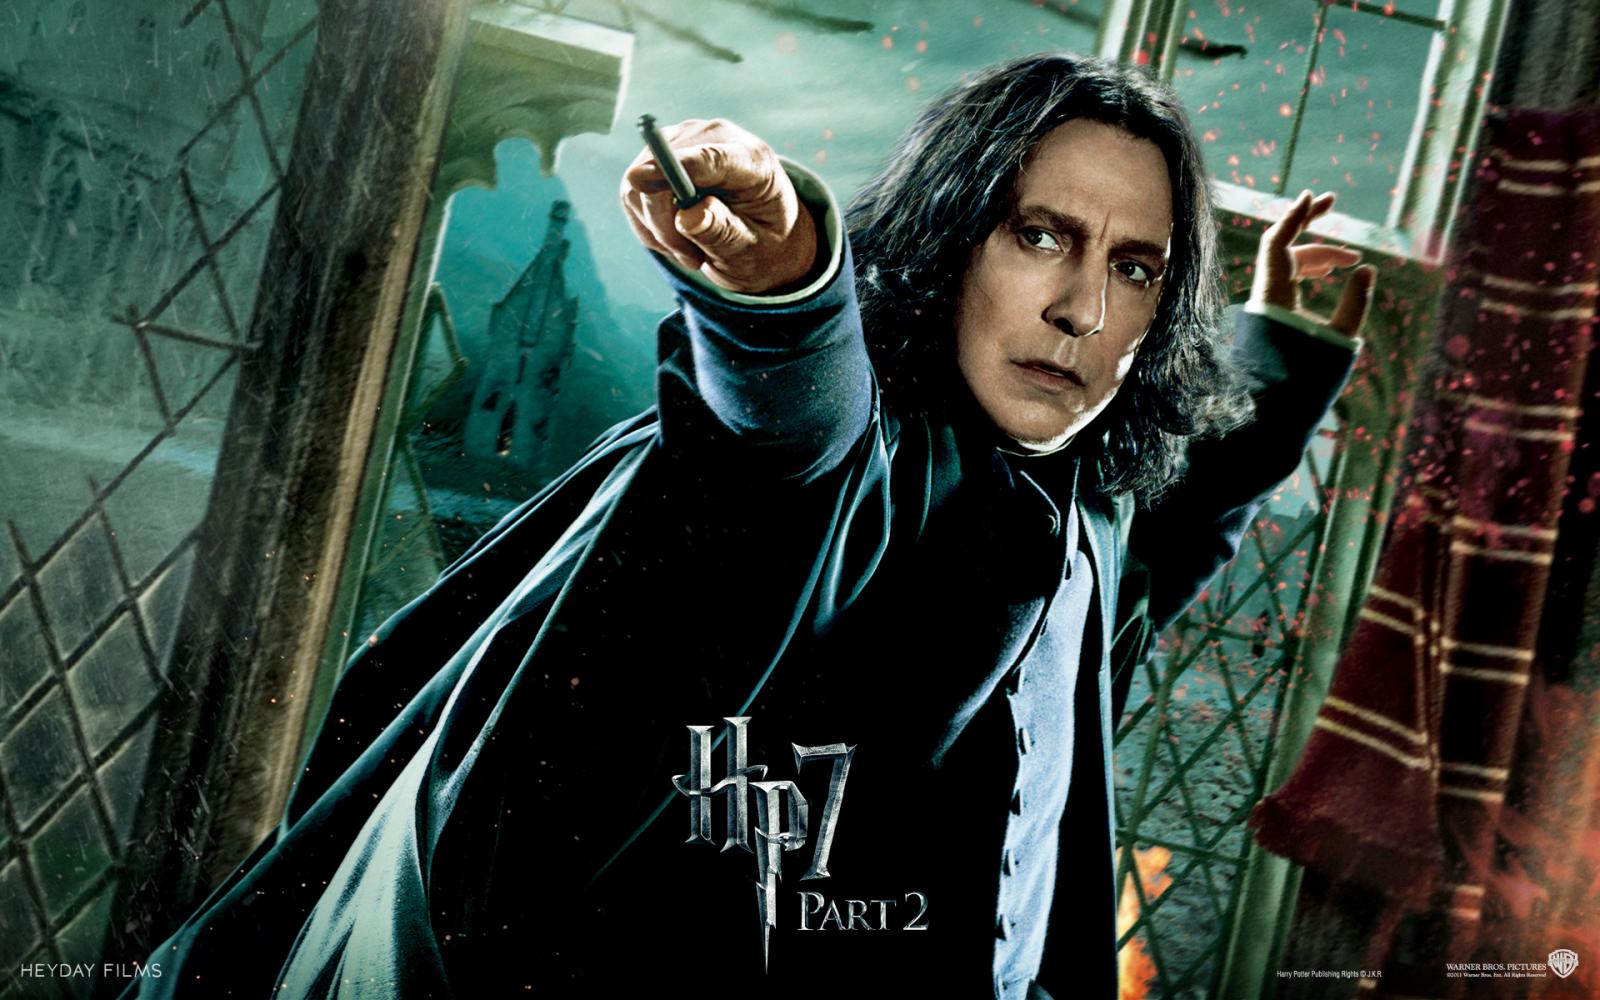 Wallpaper HP7 Professor Severus Snape - Alan Rickman Harry Potter